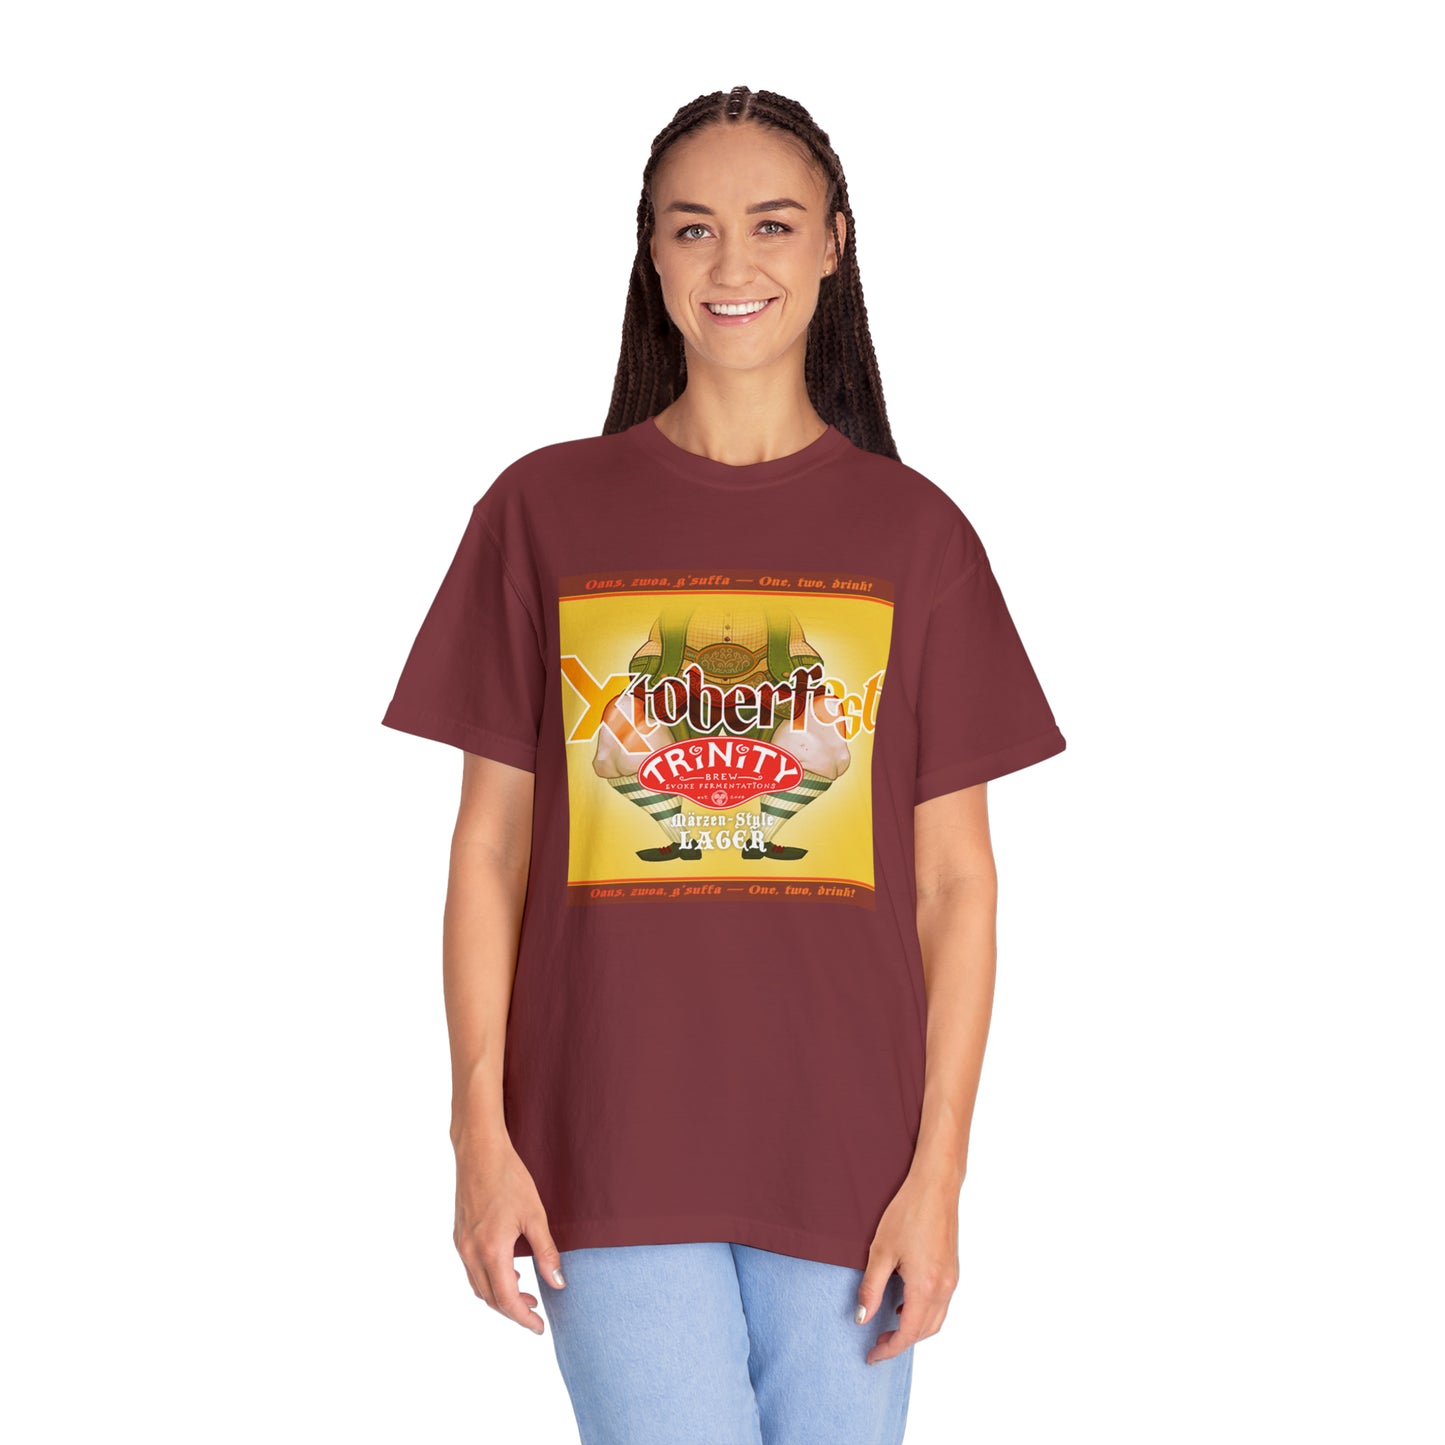 TRiNiTY Xtoberfest (Darker Colors) Oktoberfest T-Shirt - Unisex Garment-Dyed T-shirt